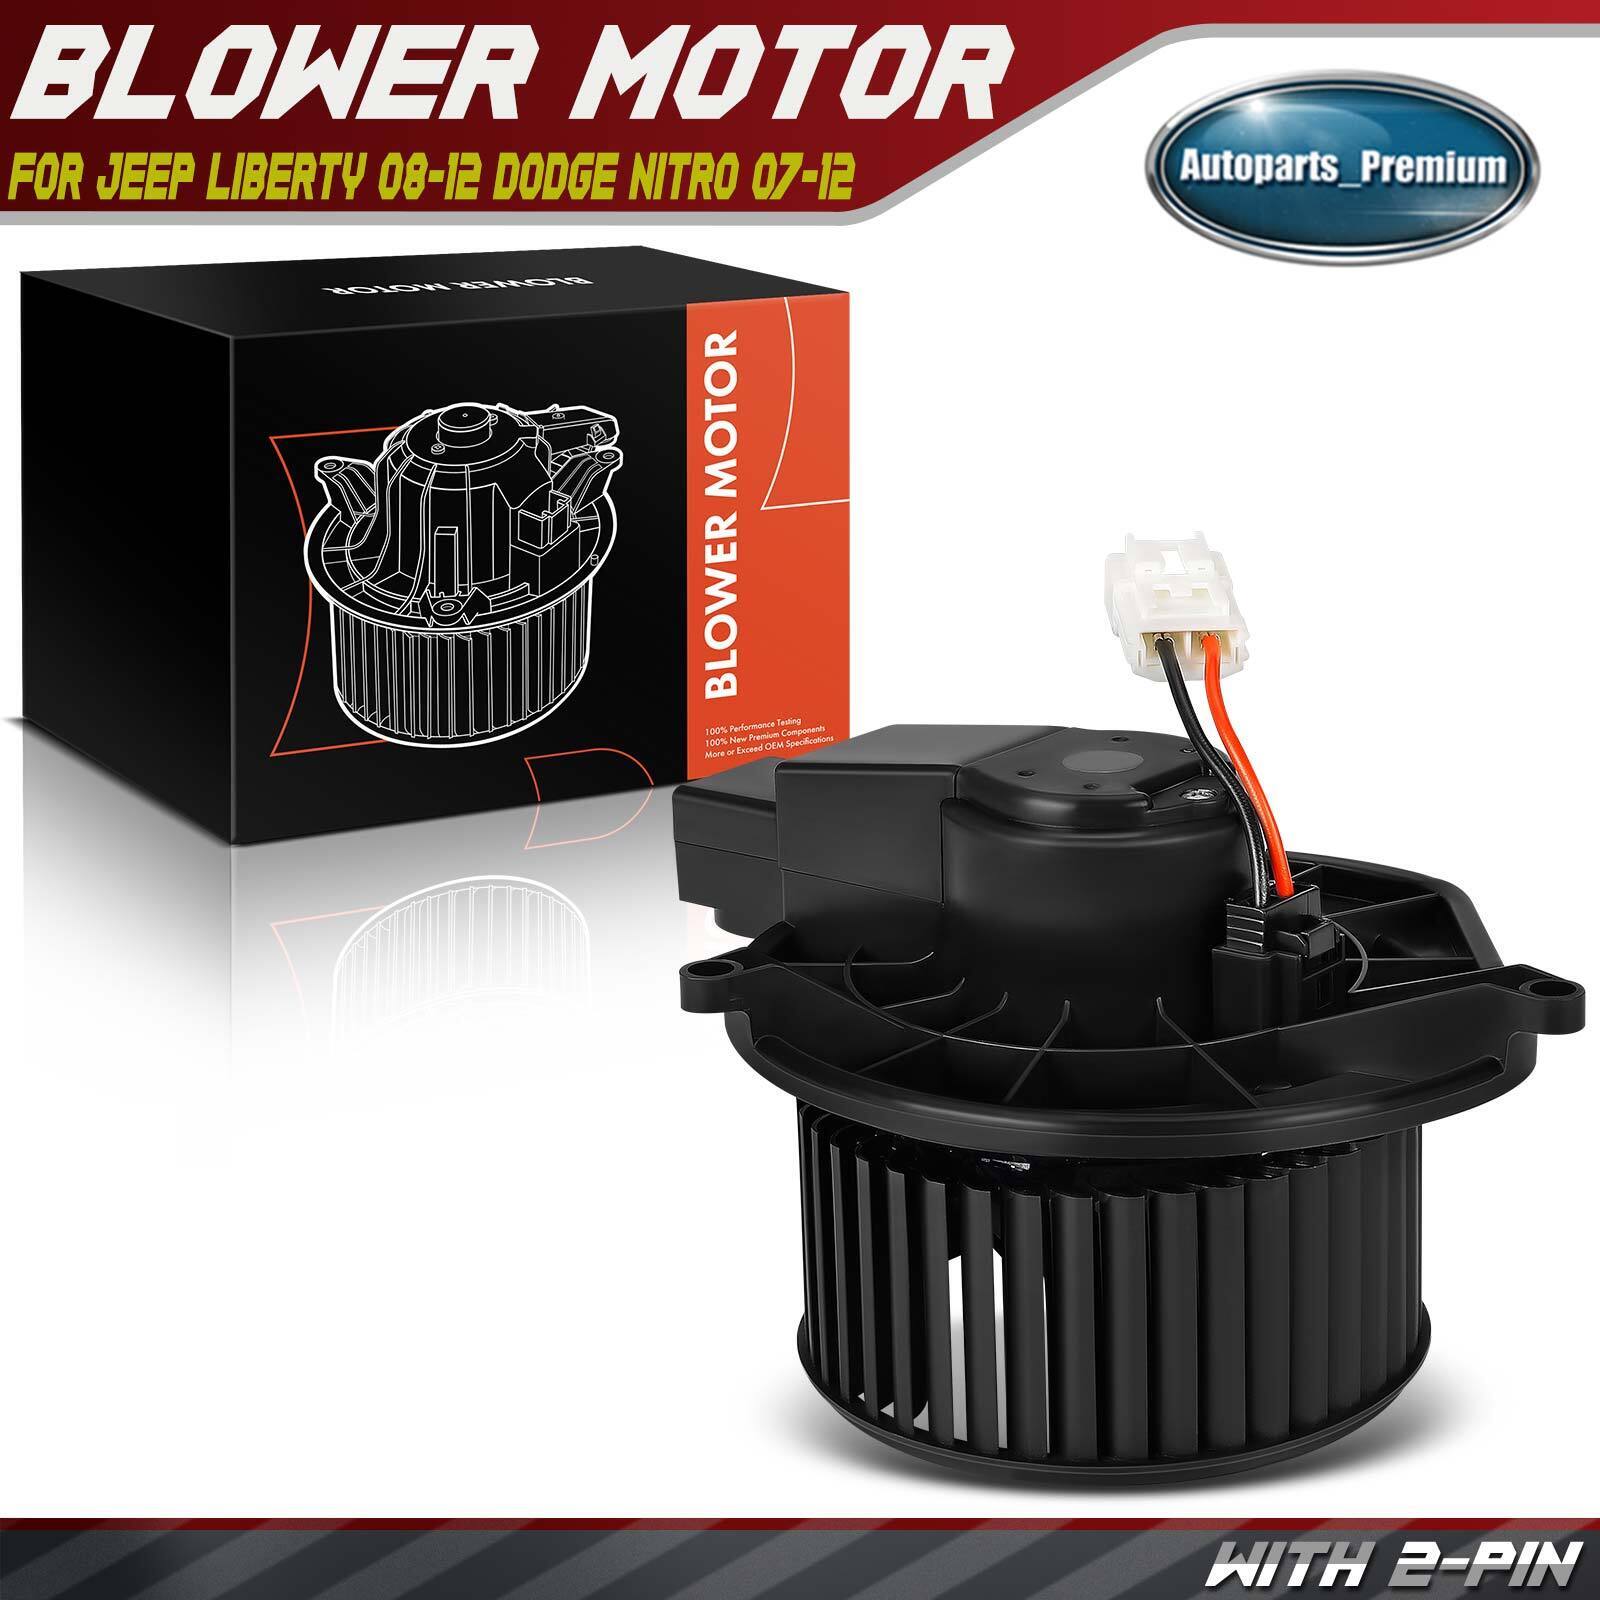 AC Heater Blower Motor for Jeep Liberty  KK 2008-2012 Dodge Nitro 2007-2012